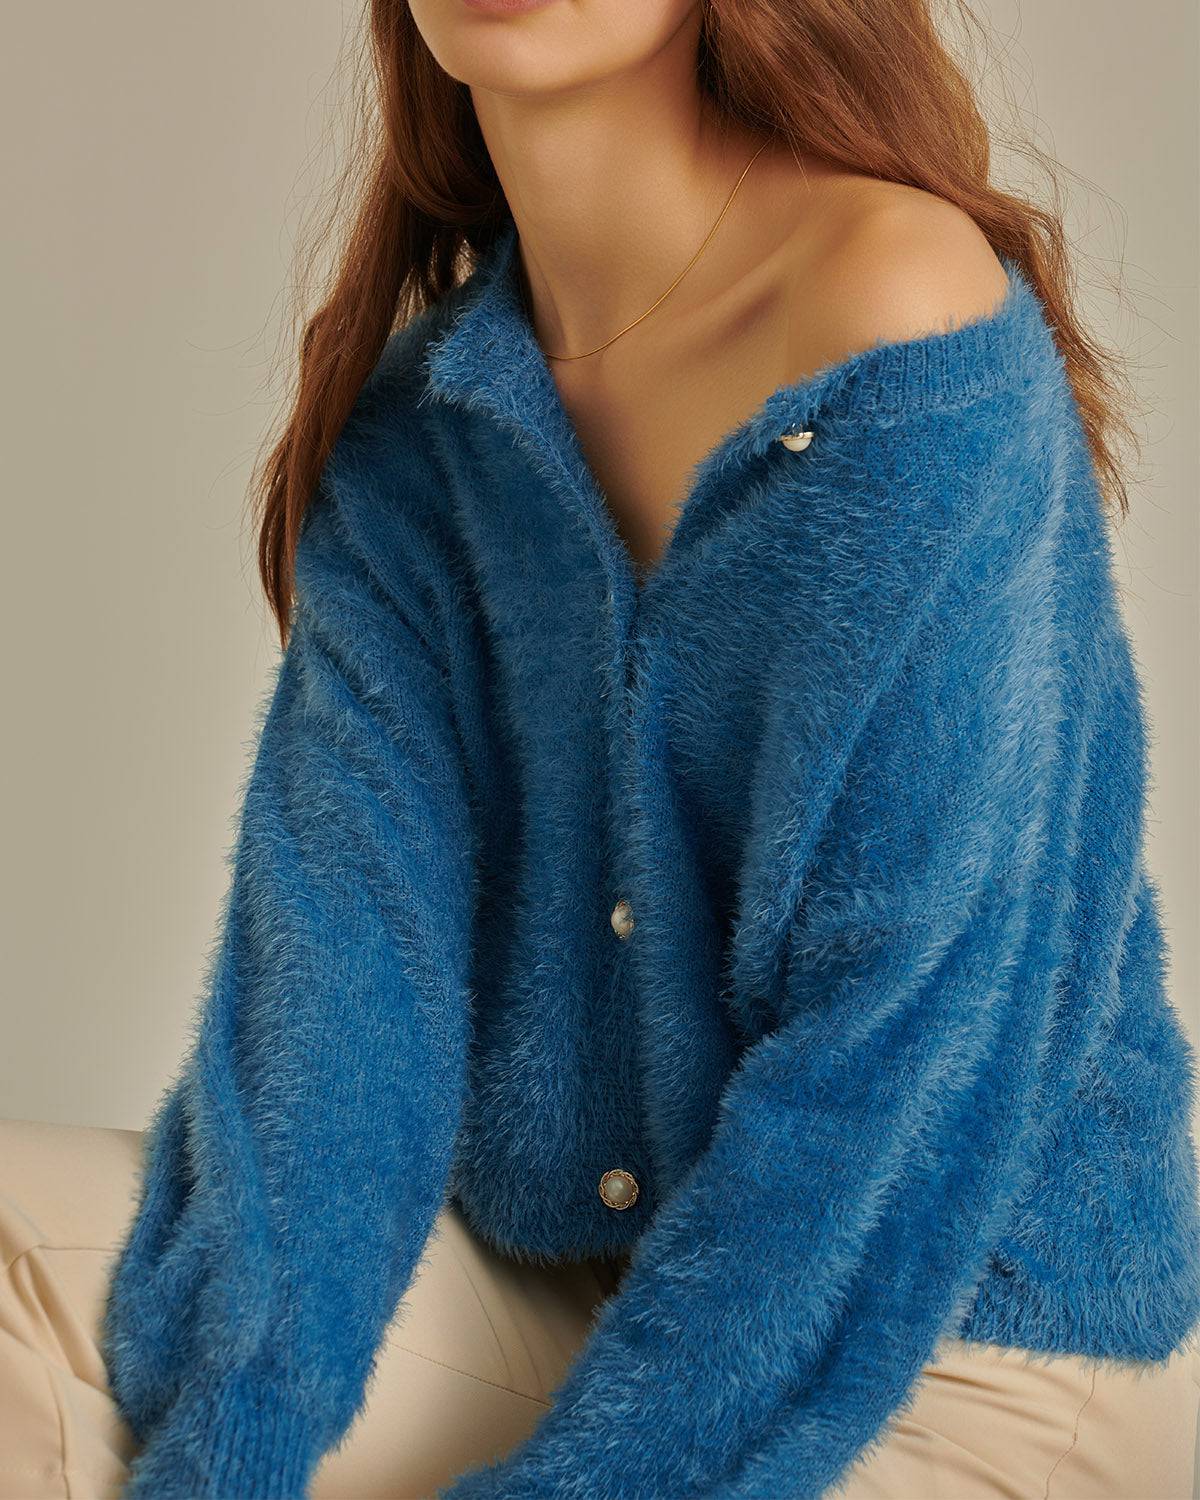 Fluffy Sweater